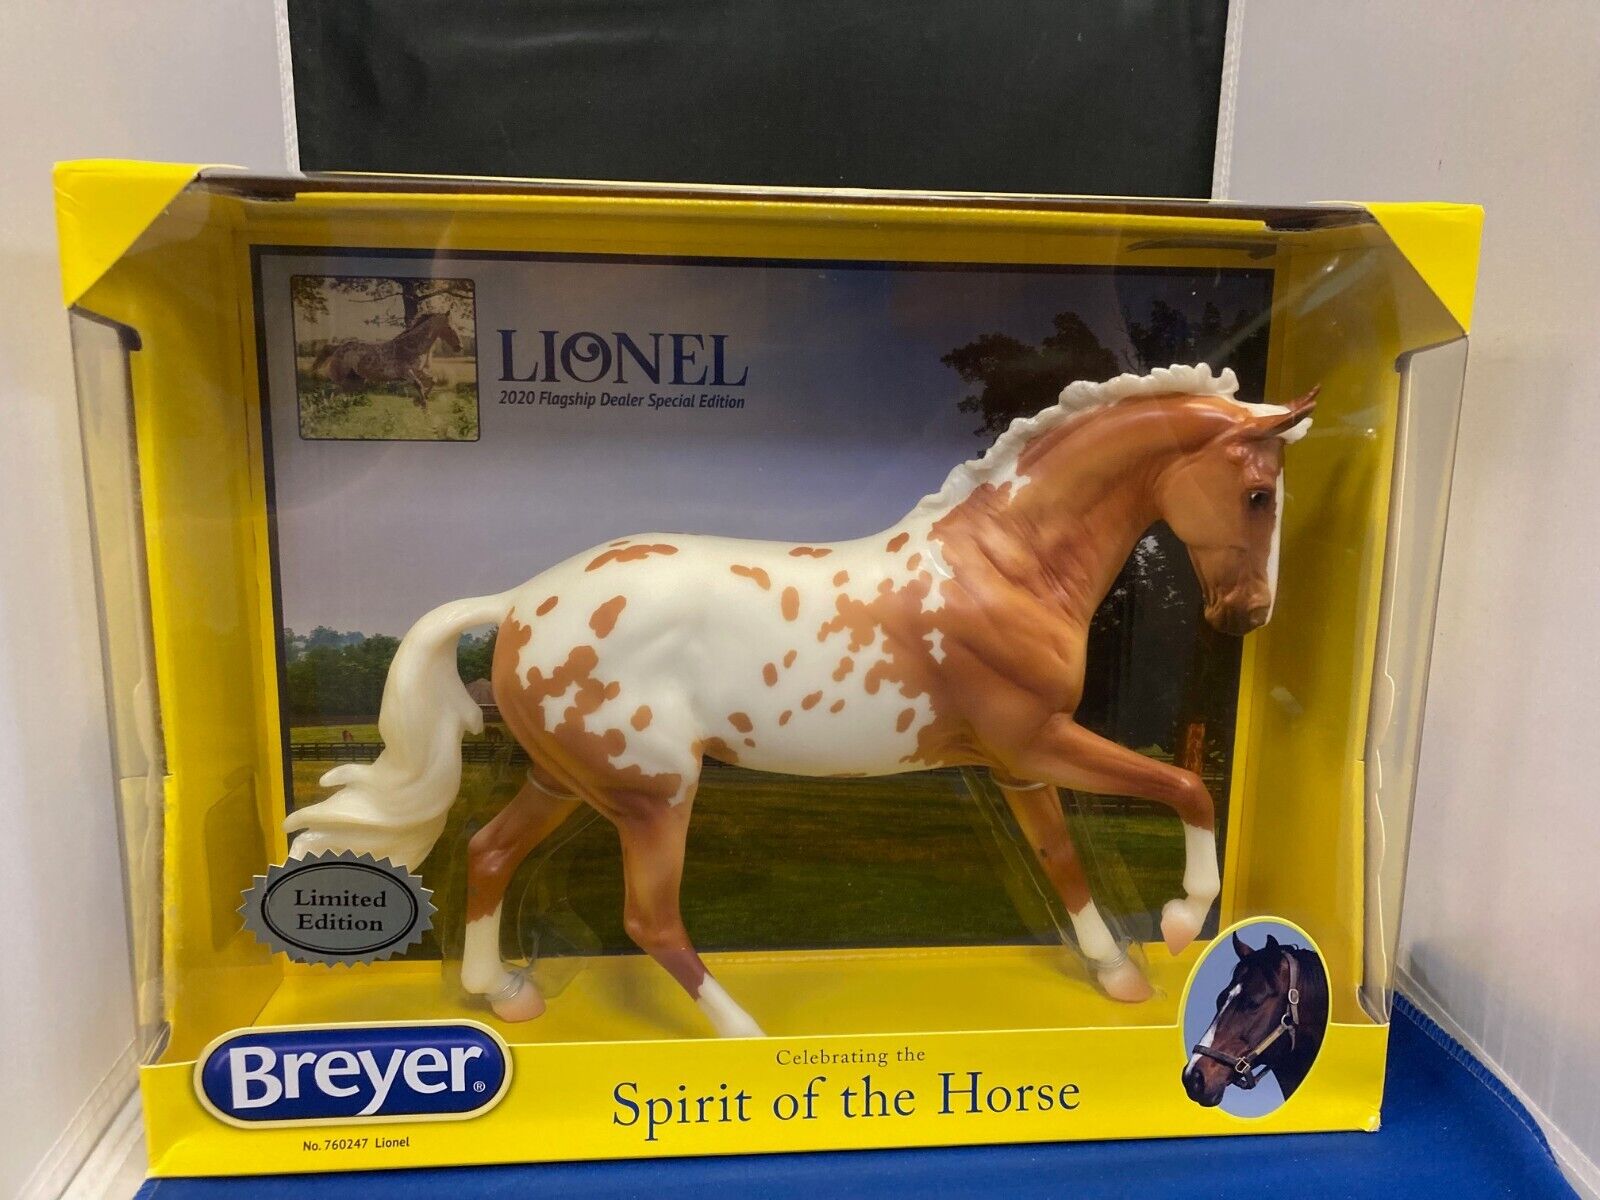 Breyer 760247 Lionel 2020 Flagship Dealer Special Limted Edition Horse New/Box